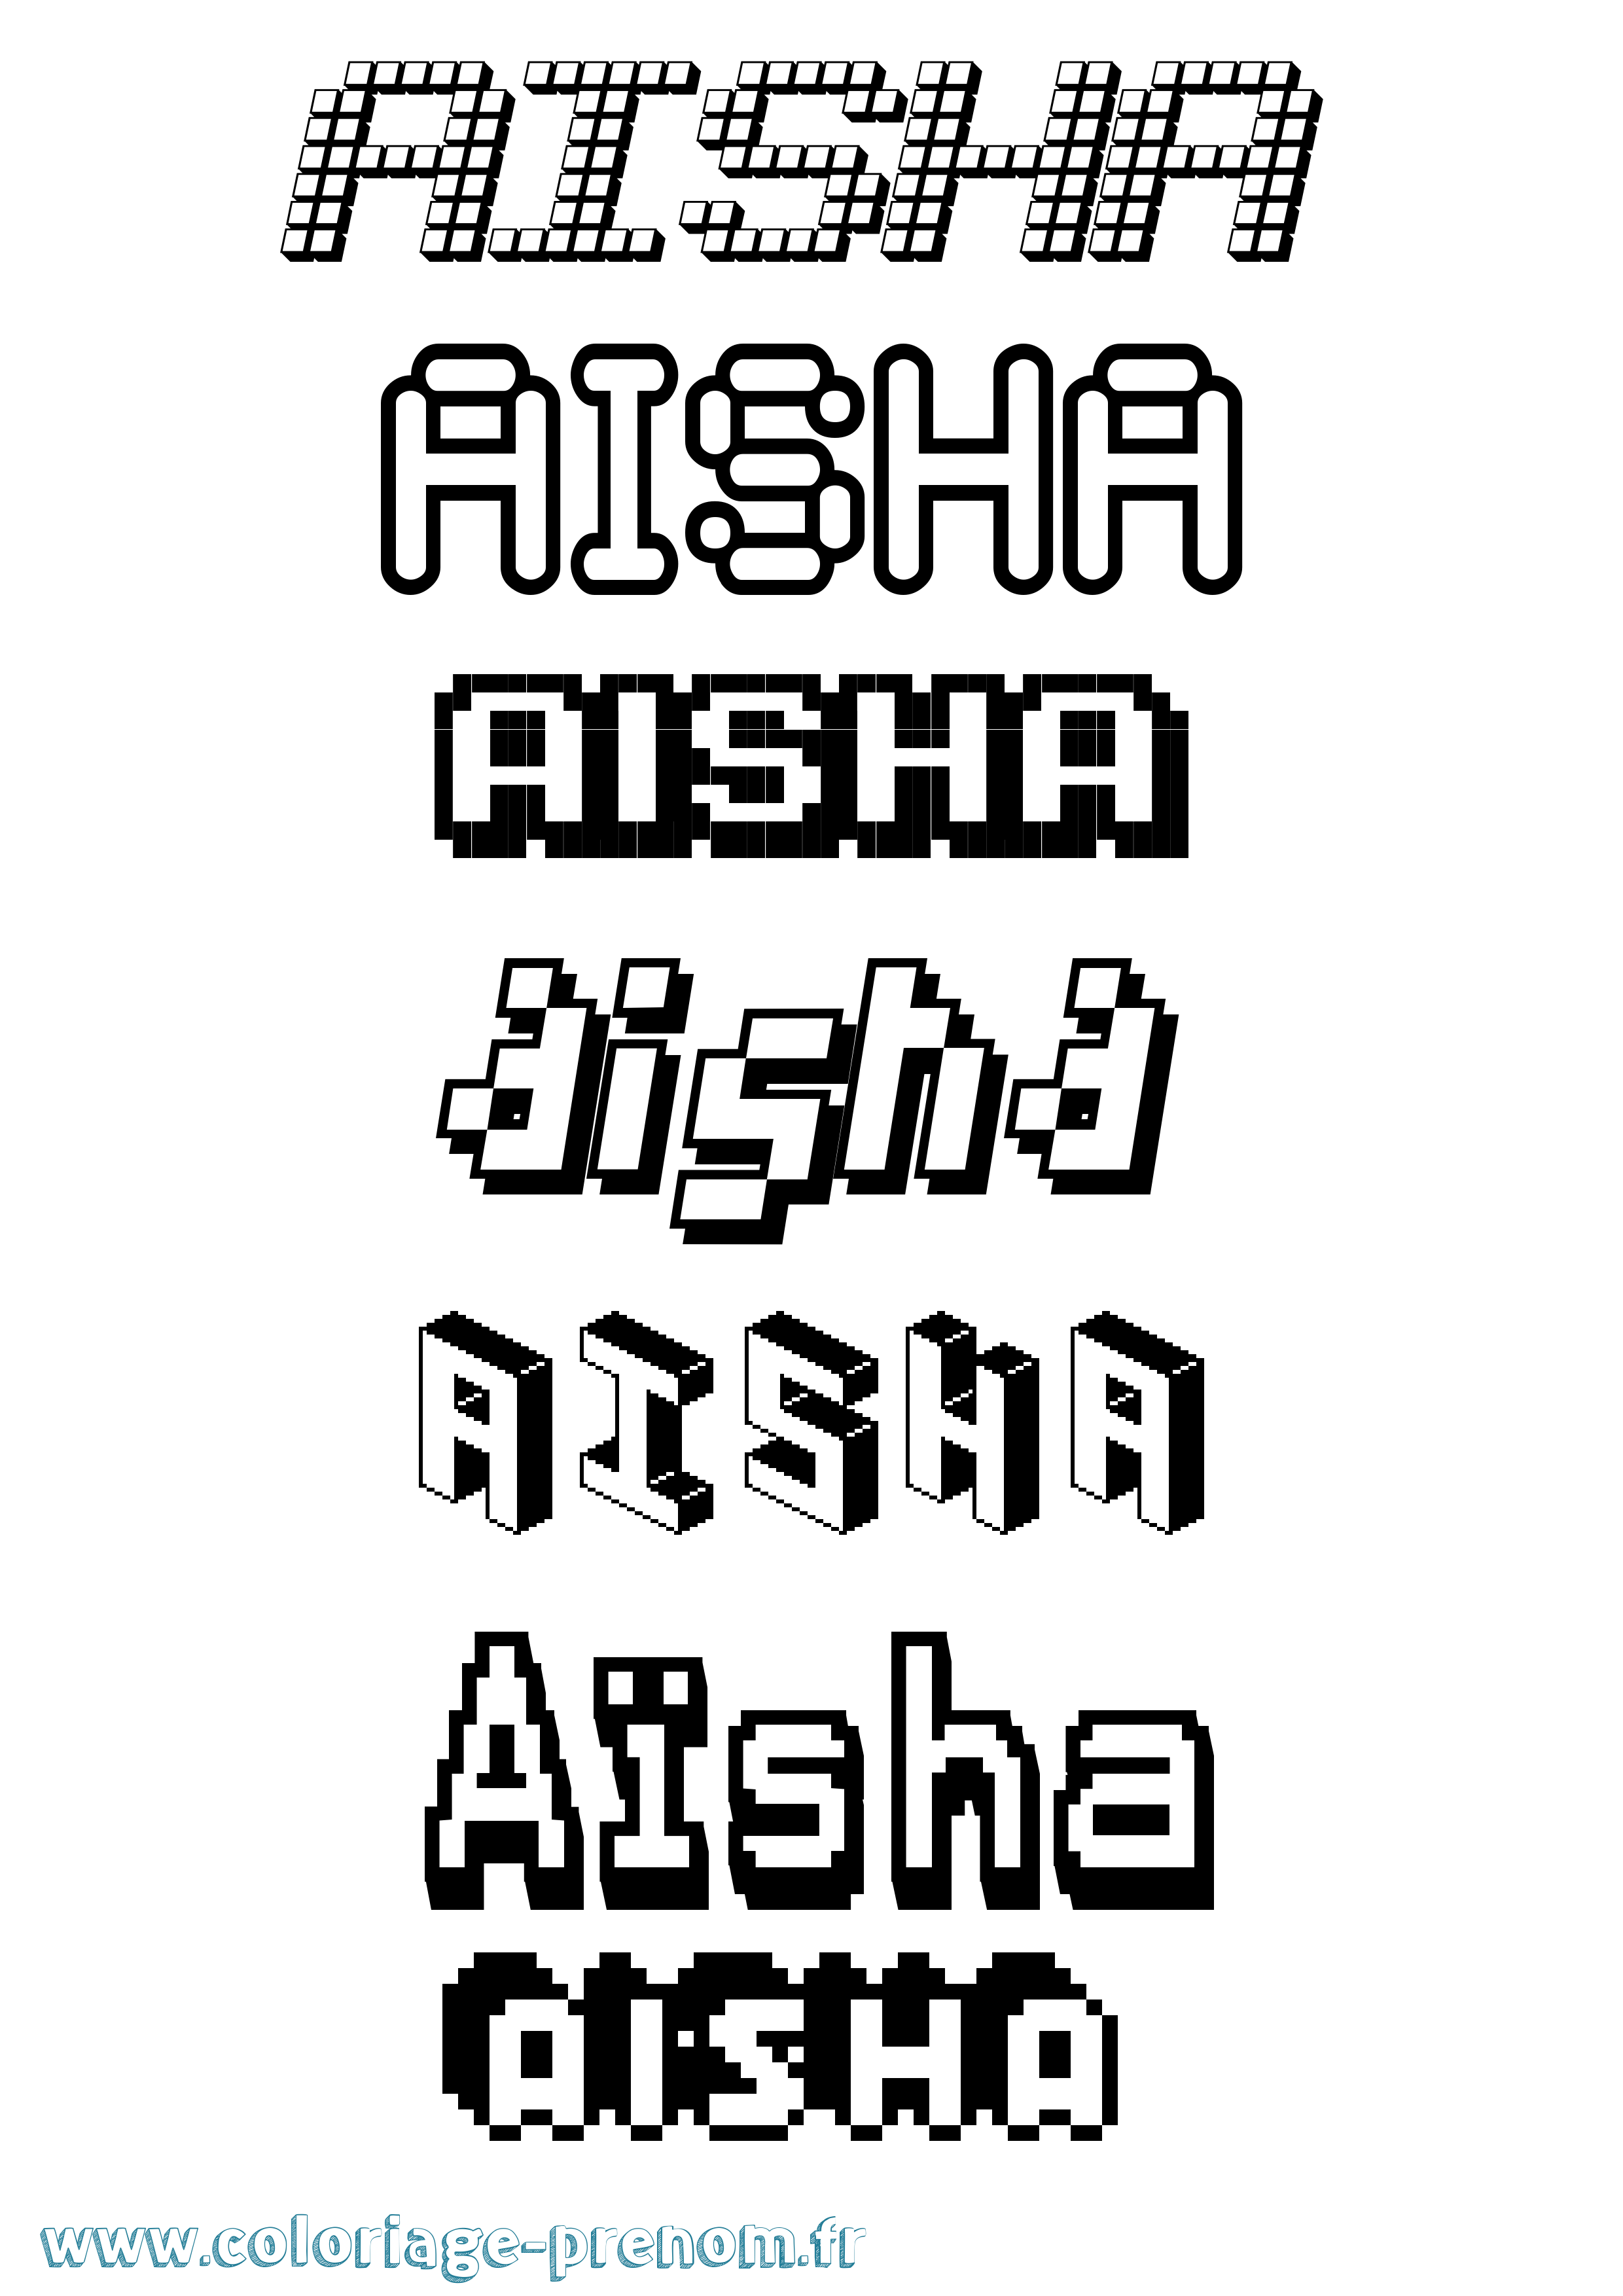 Coloriage prénom Aïsha